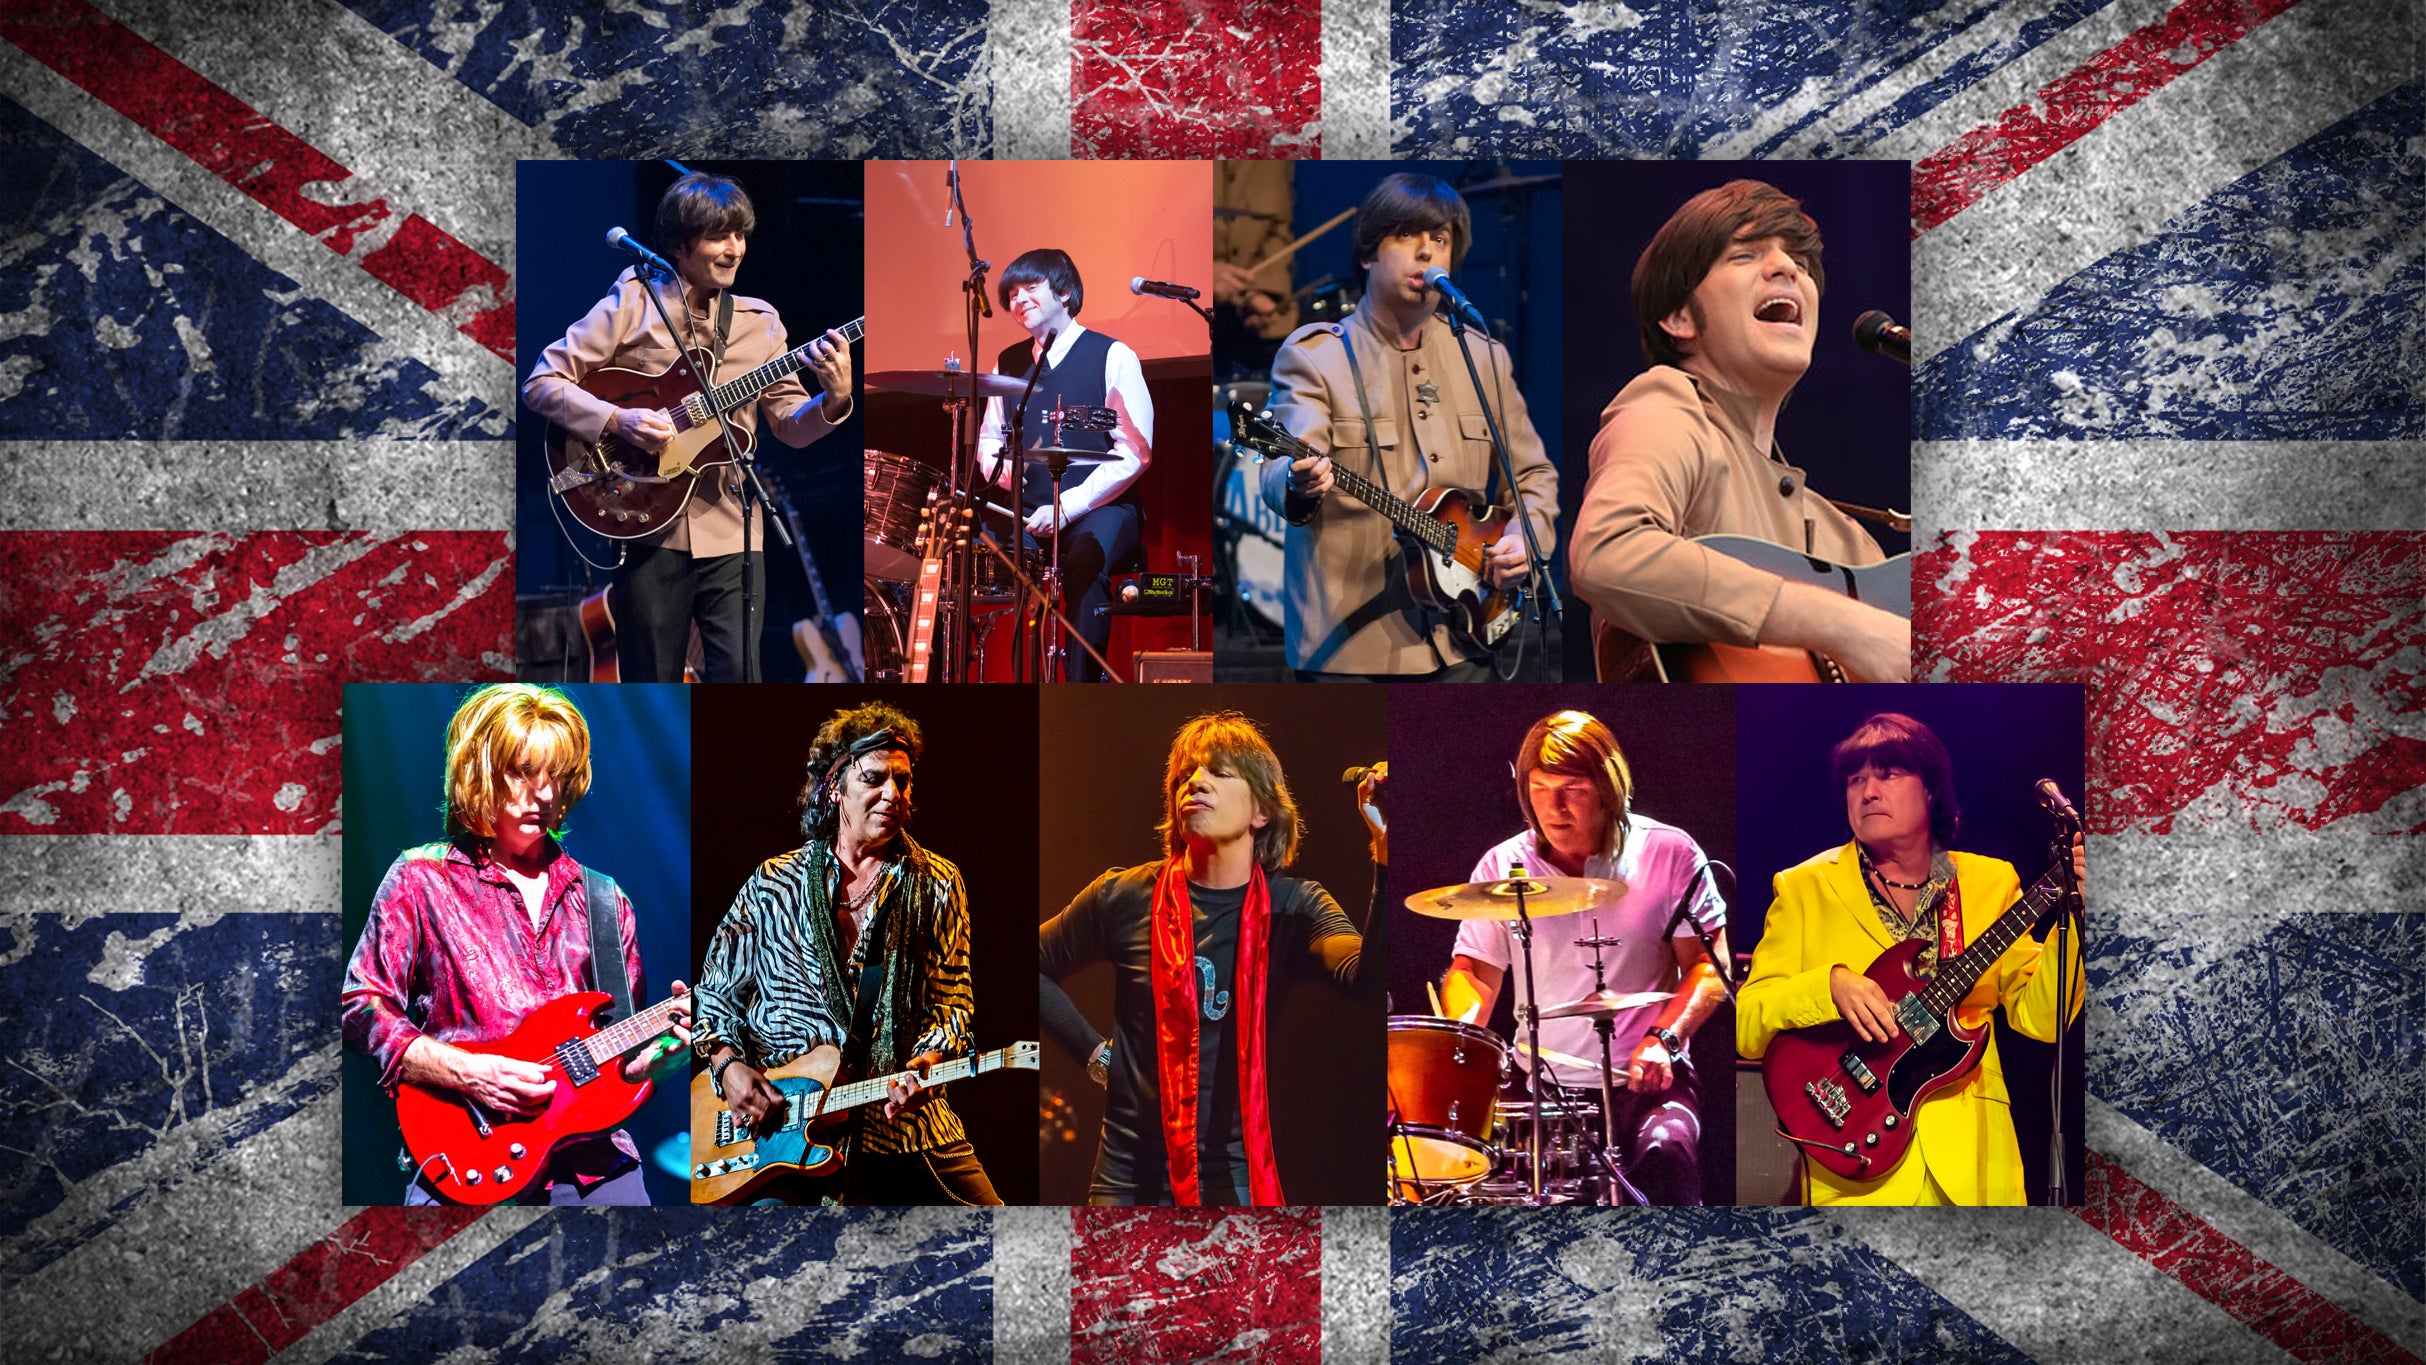 Beatles Vs Stones - A Musical Showdown in Riverside promo photo for Live Nation presale offer code